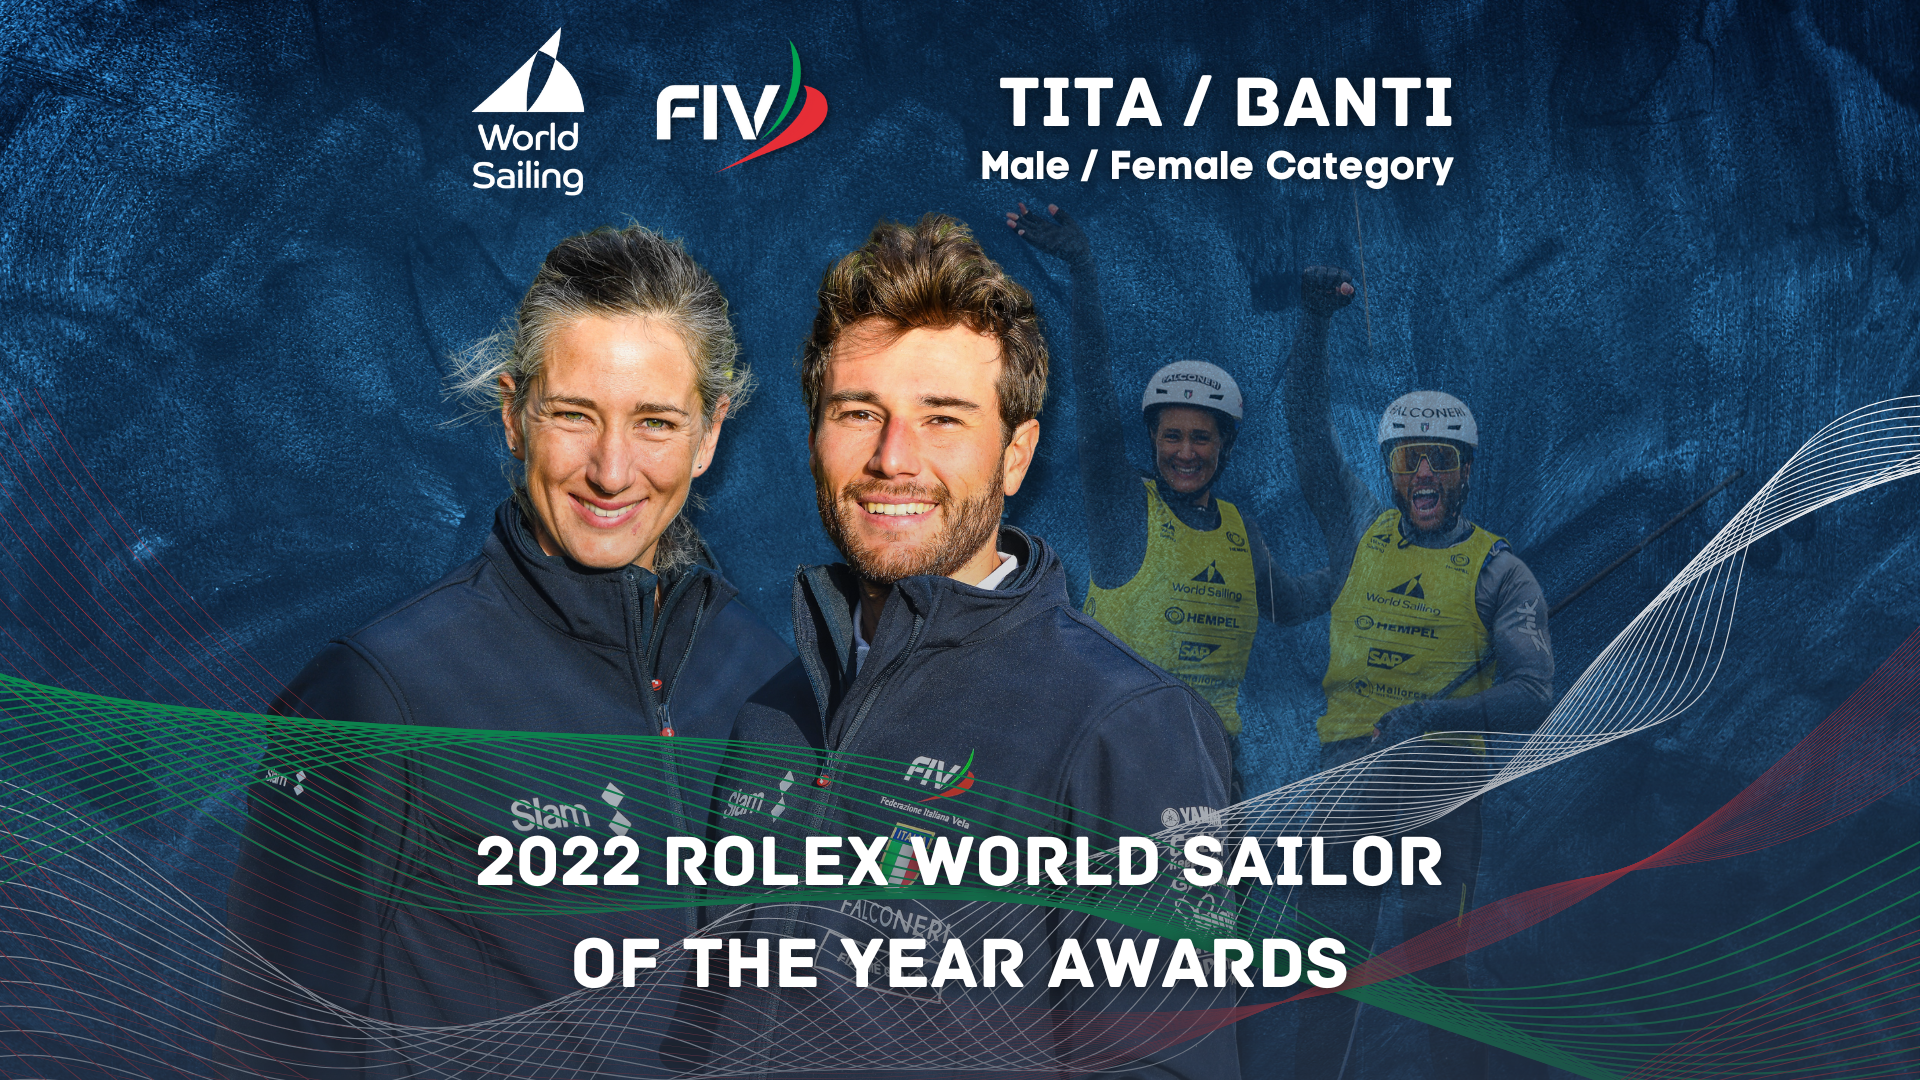 Caterina Banti and Ruggero Tita are the Rolex Sailors of Year 2022